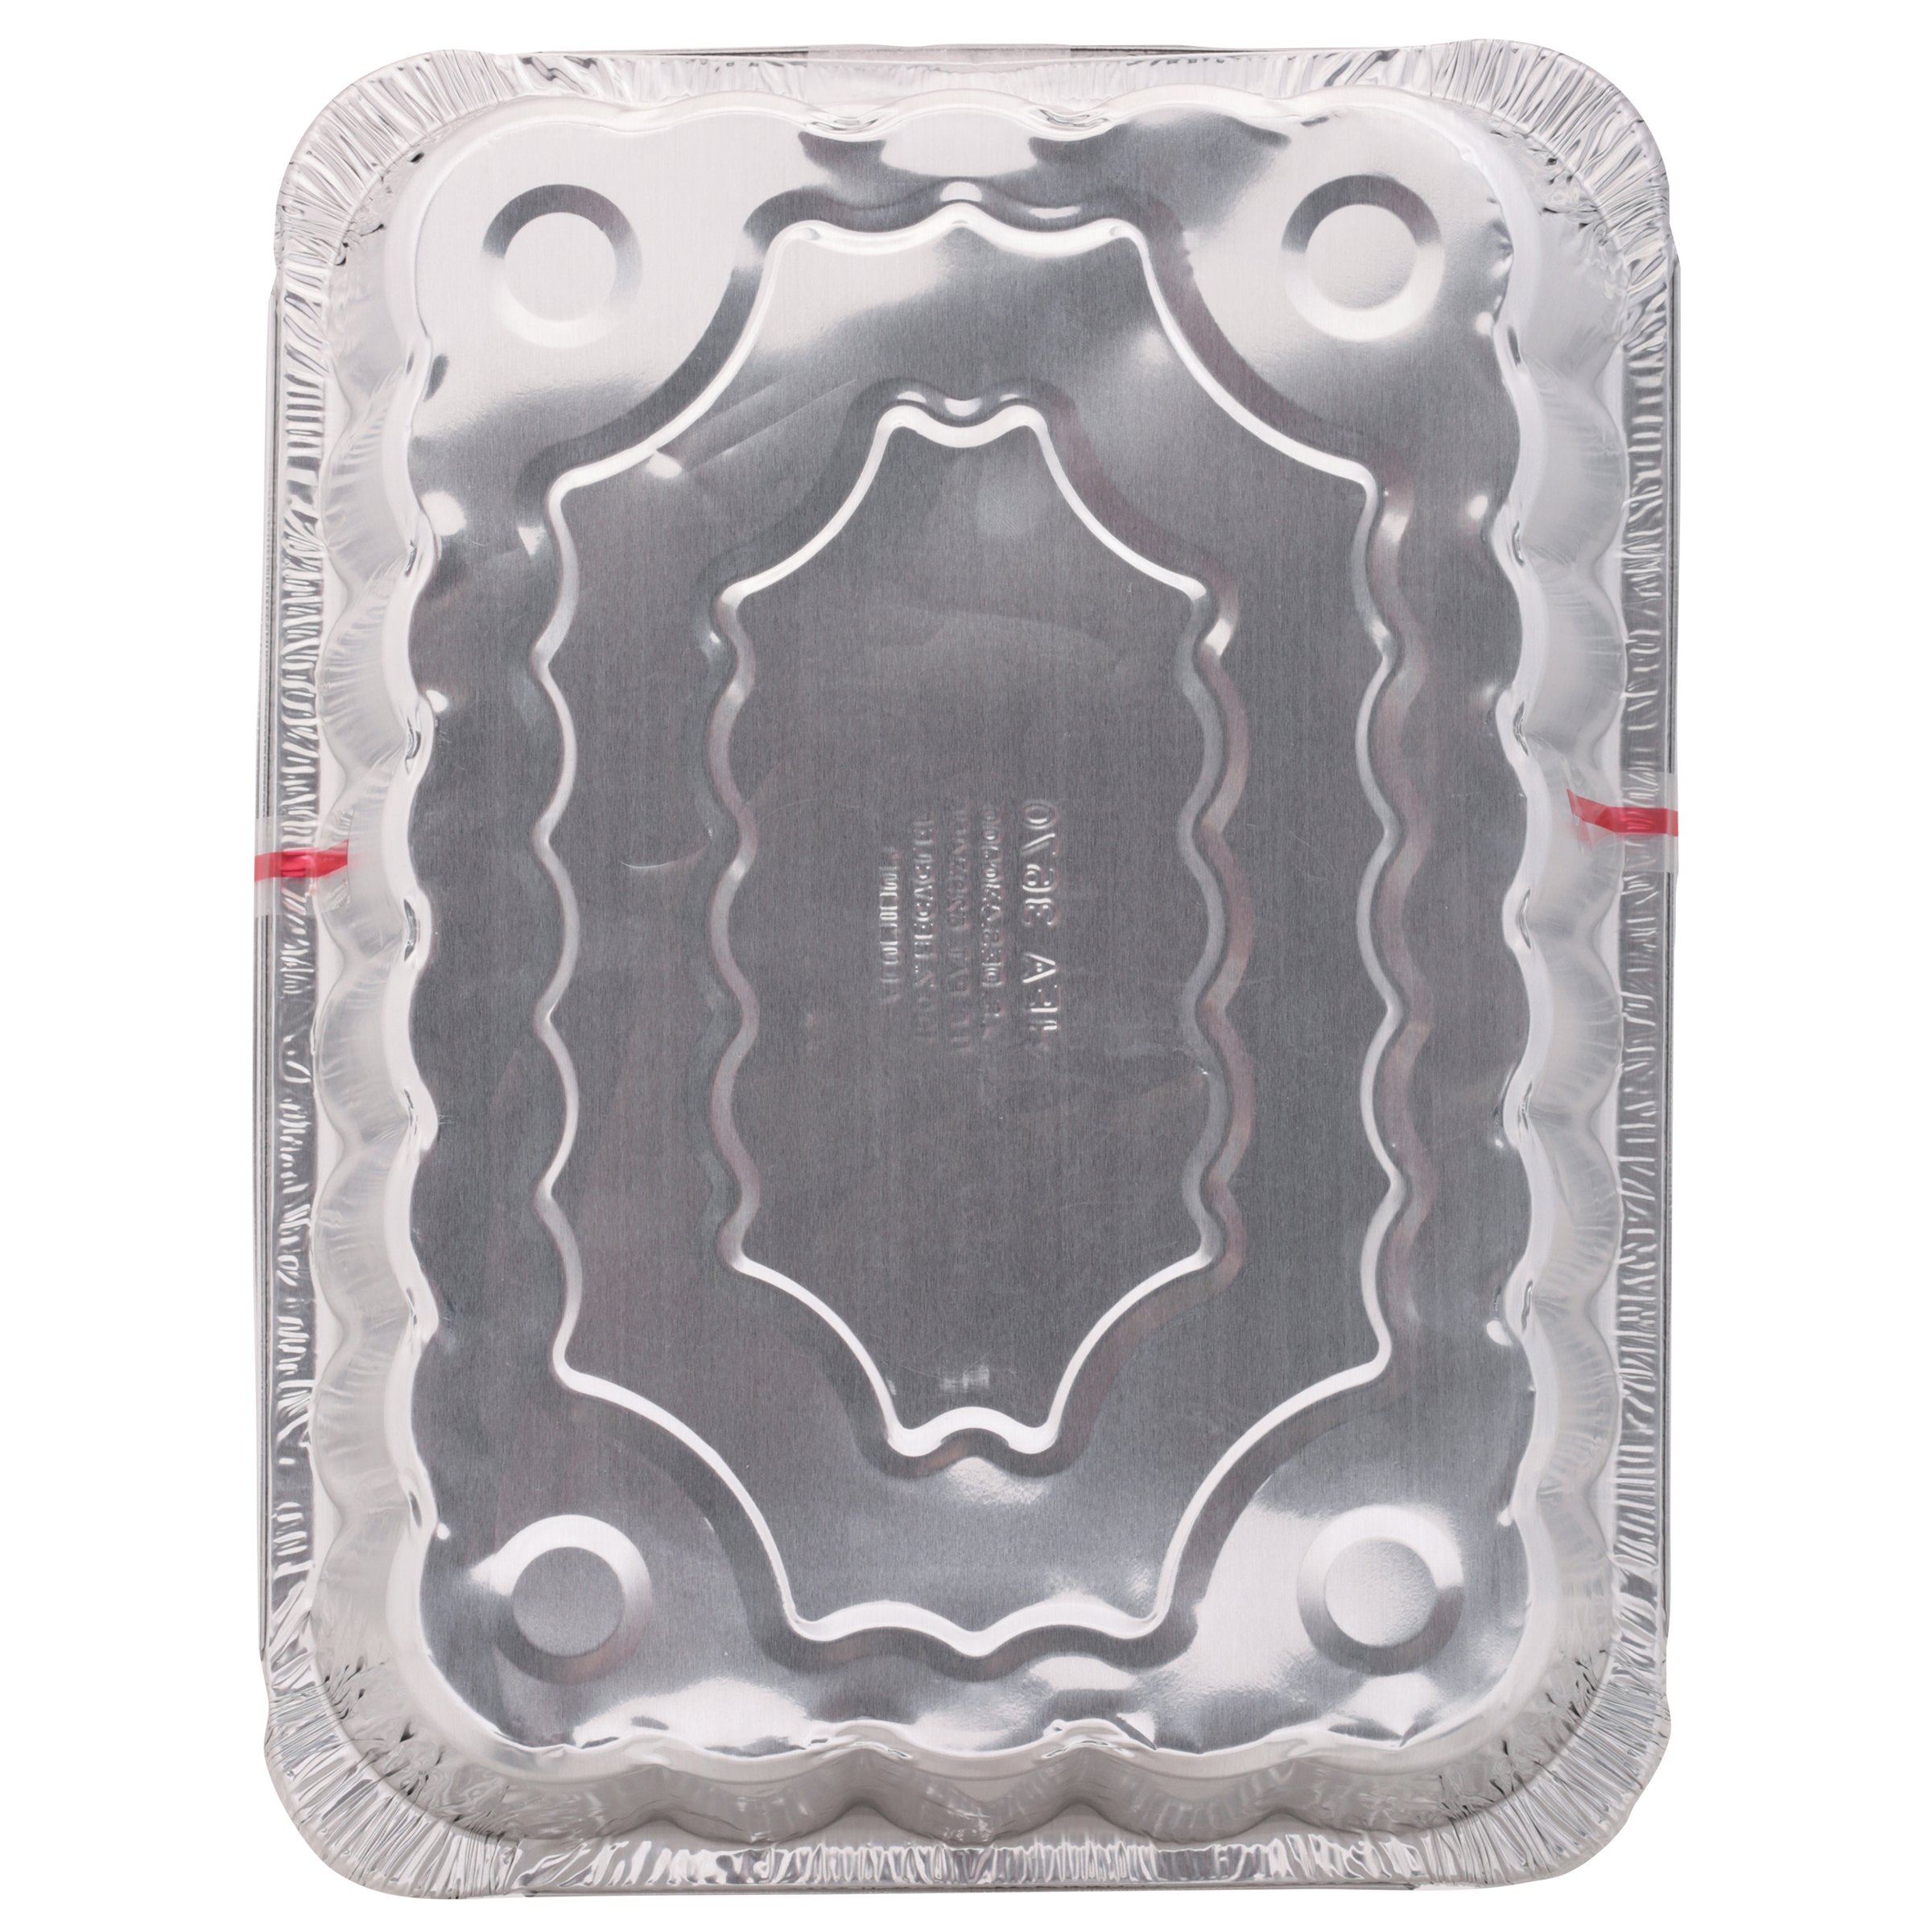 Handi-Foil Aluminum Foil Giant All Purpose Pan with Lid, 1 Count 13.5 x  9.625 x 2.75